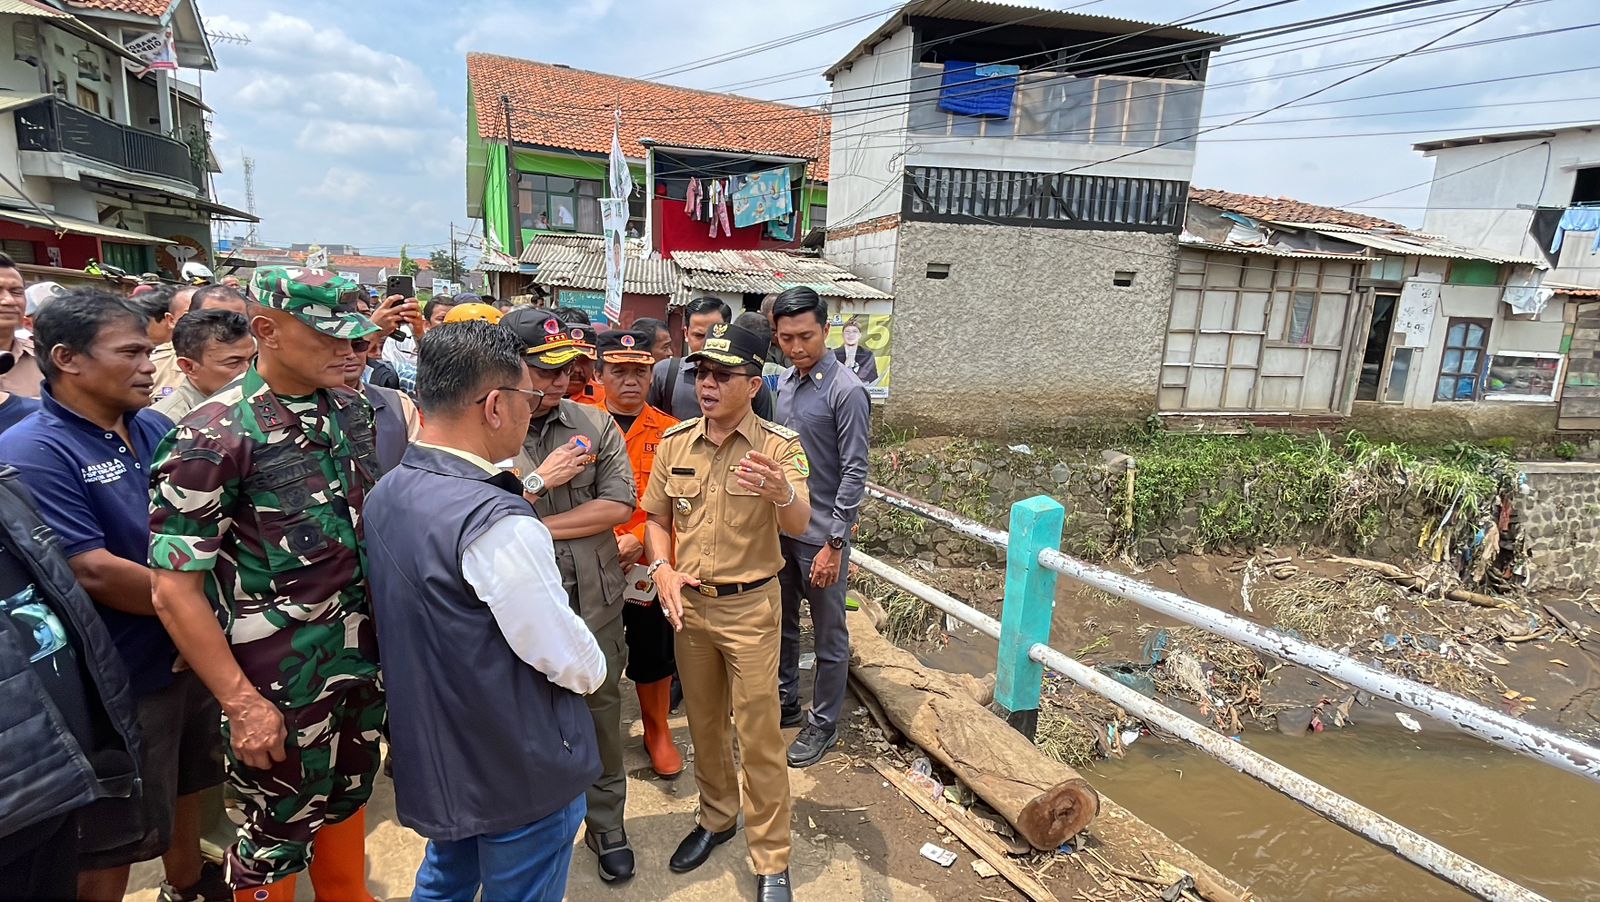 BNPB Rapat Koordinasi Bencana Banjir, Sebut Jawa Barat Rangki Pertama Rawan Bencana